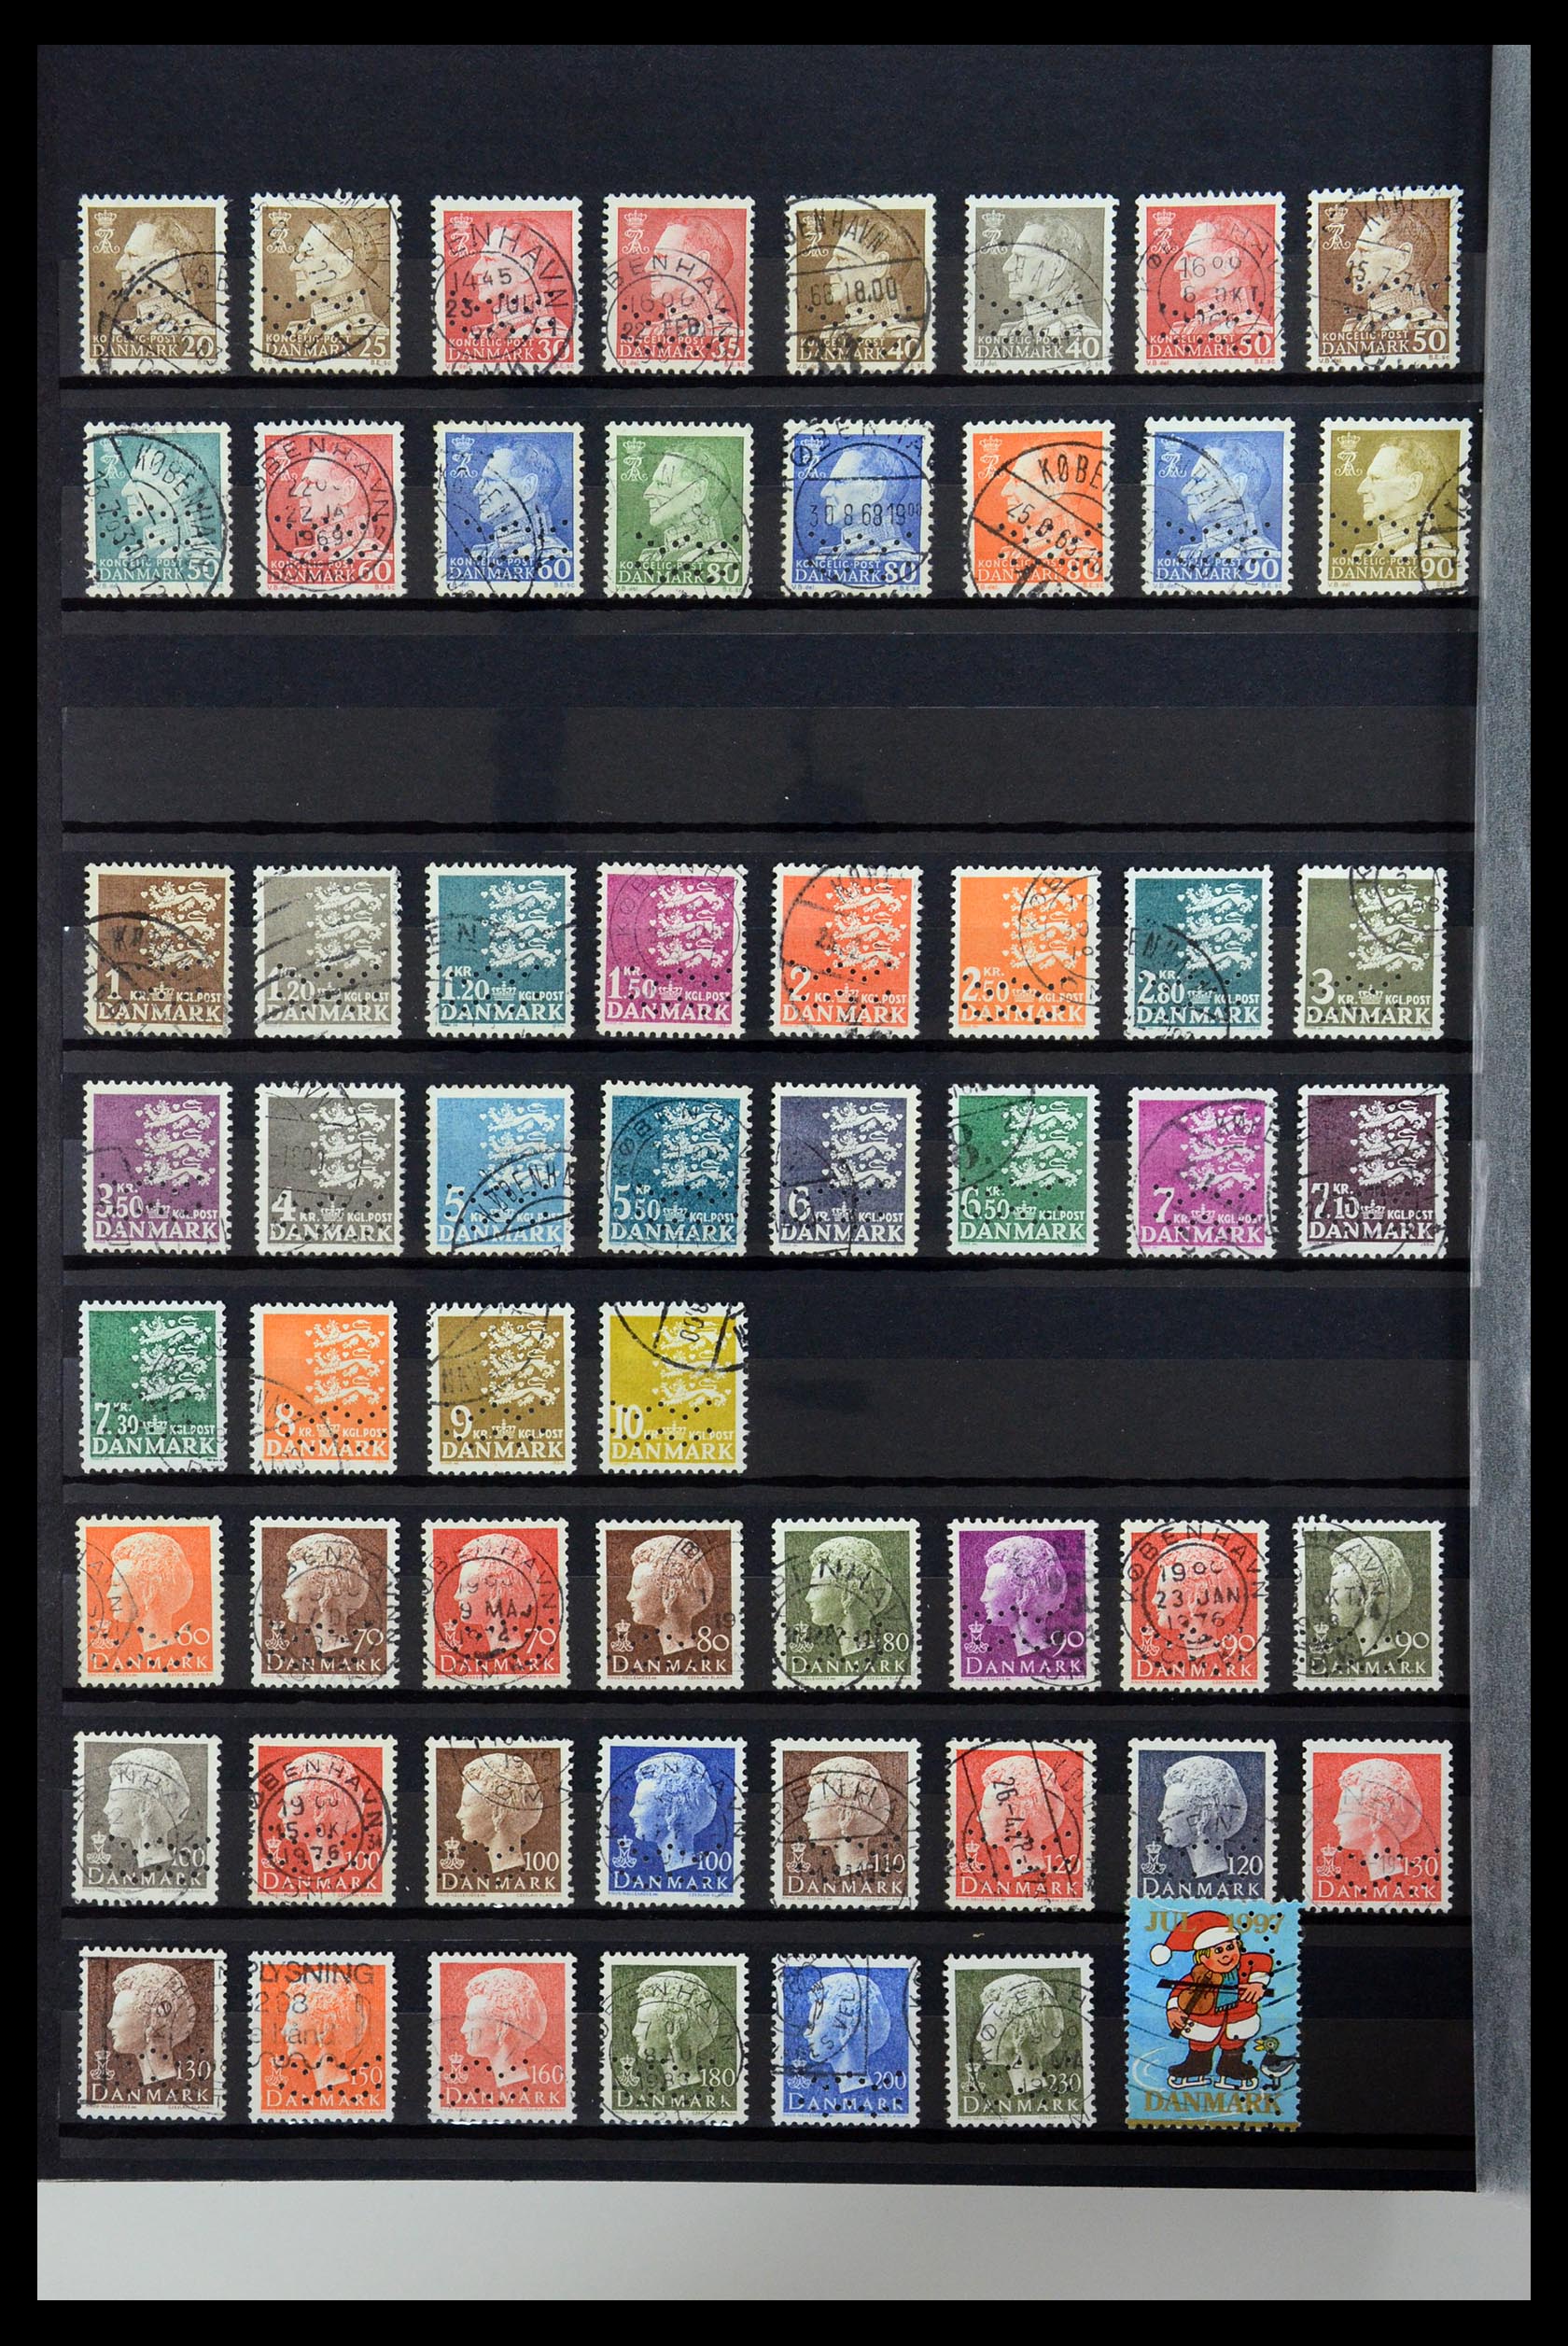 36396 232 - Stamp collection 36396 Denmark perfins.